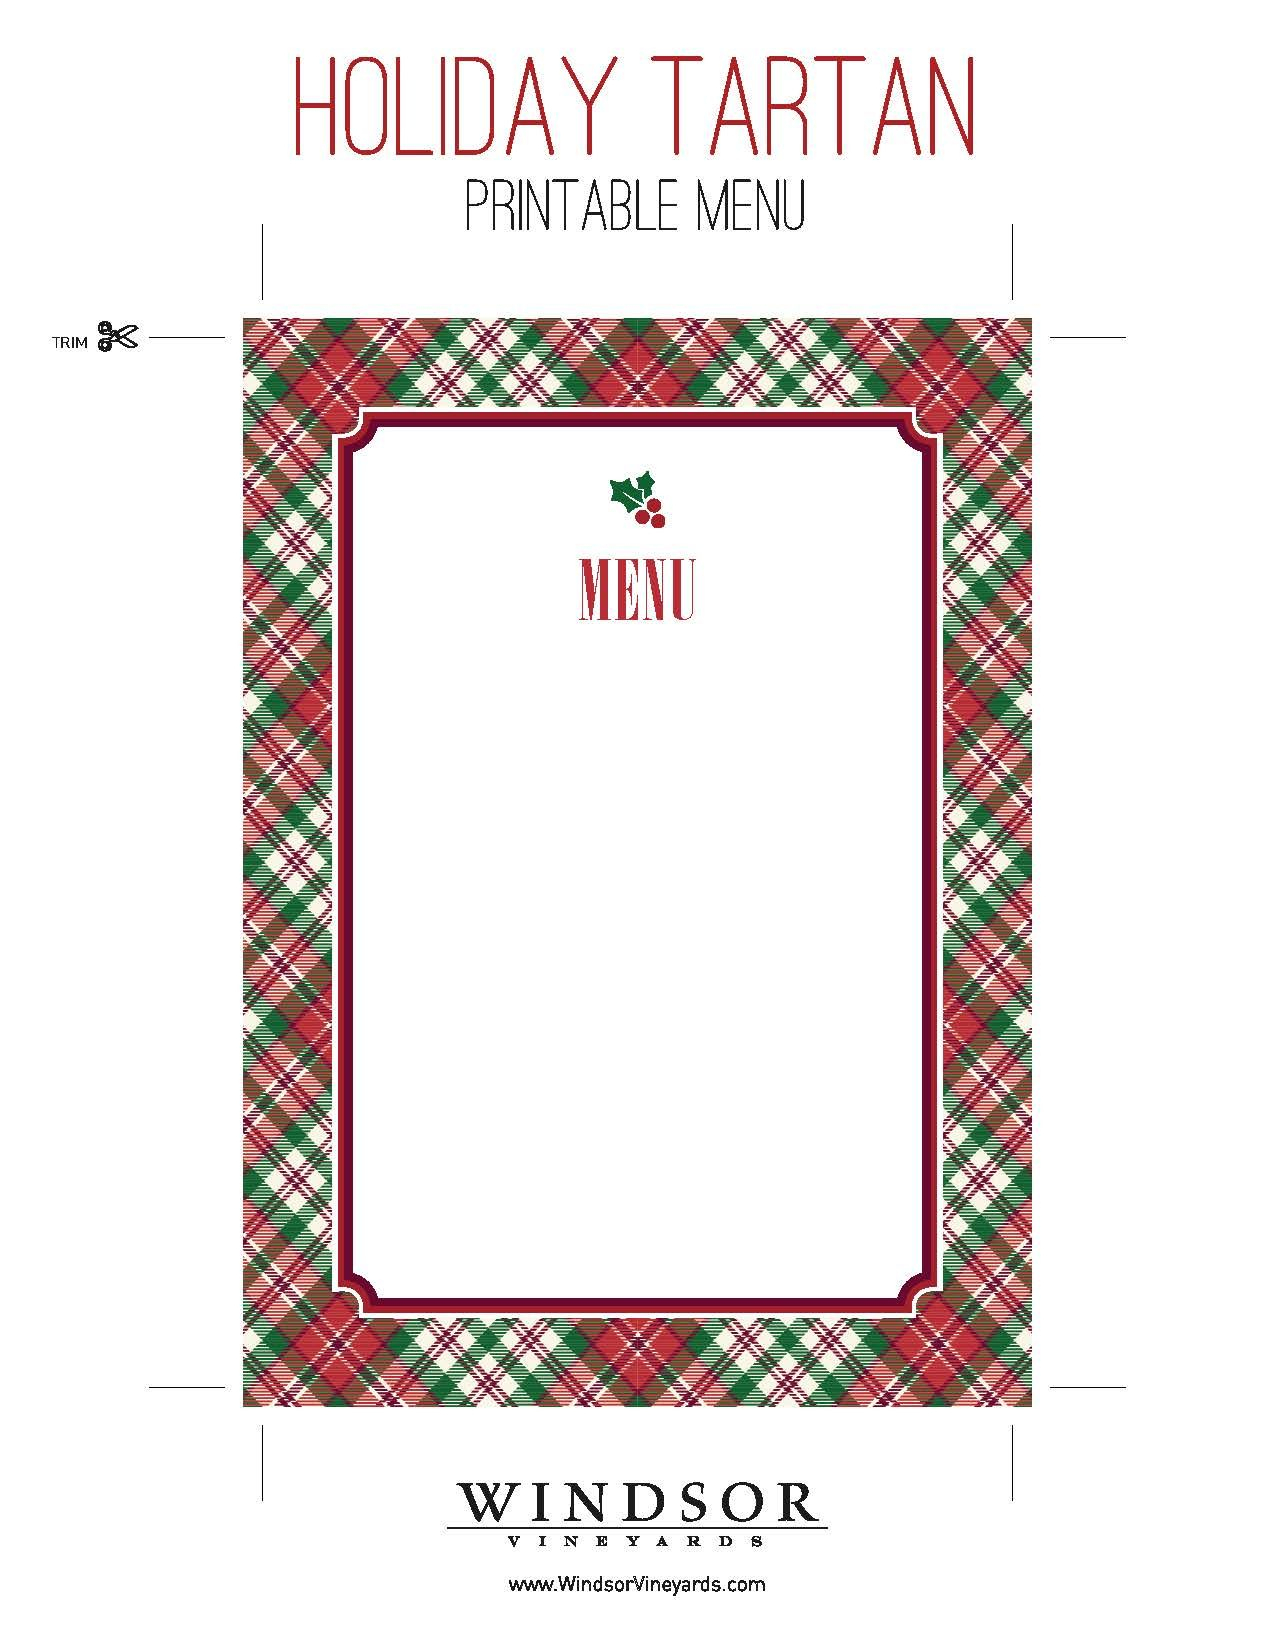 Printable Tartan Menu Template For Holiday Entertaining. Download - Christmas Menu Printable Template Free